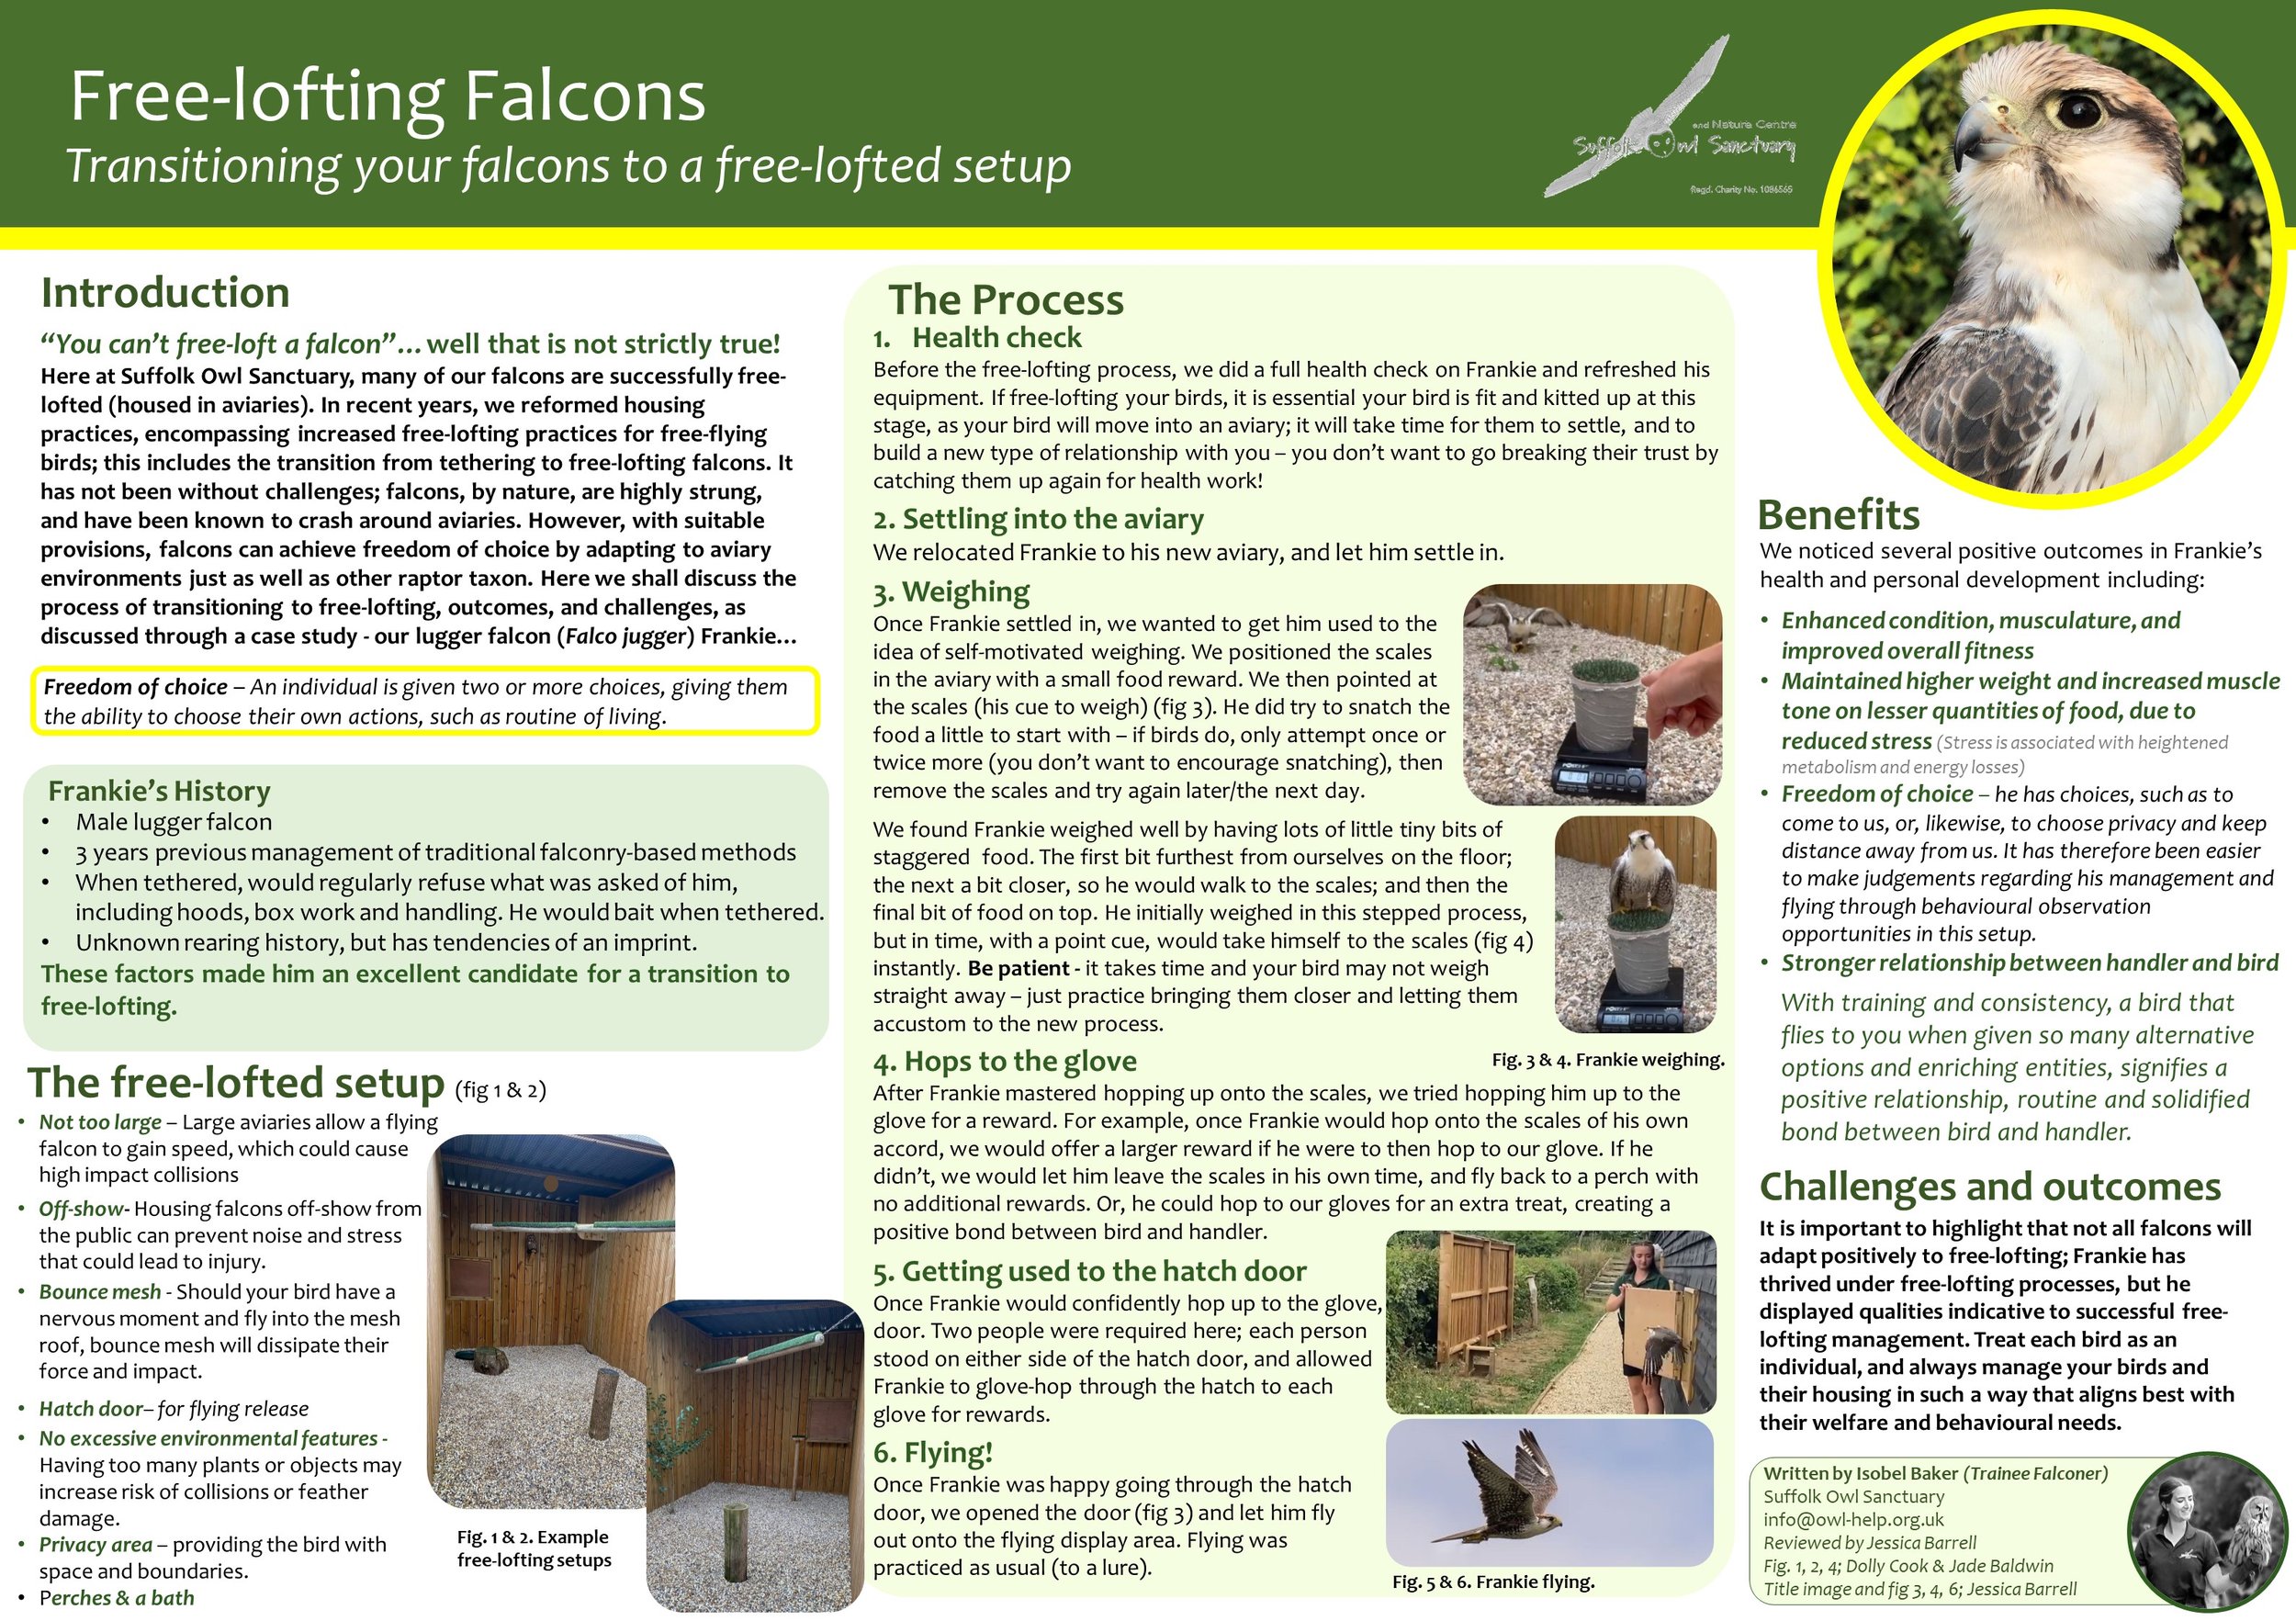 Free-lofting falcons.JPG